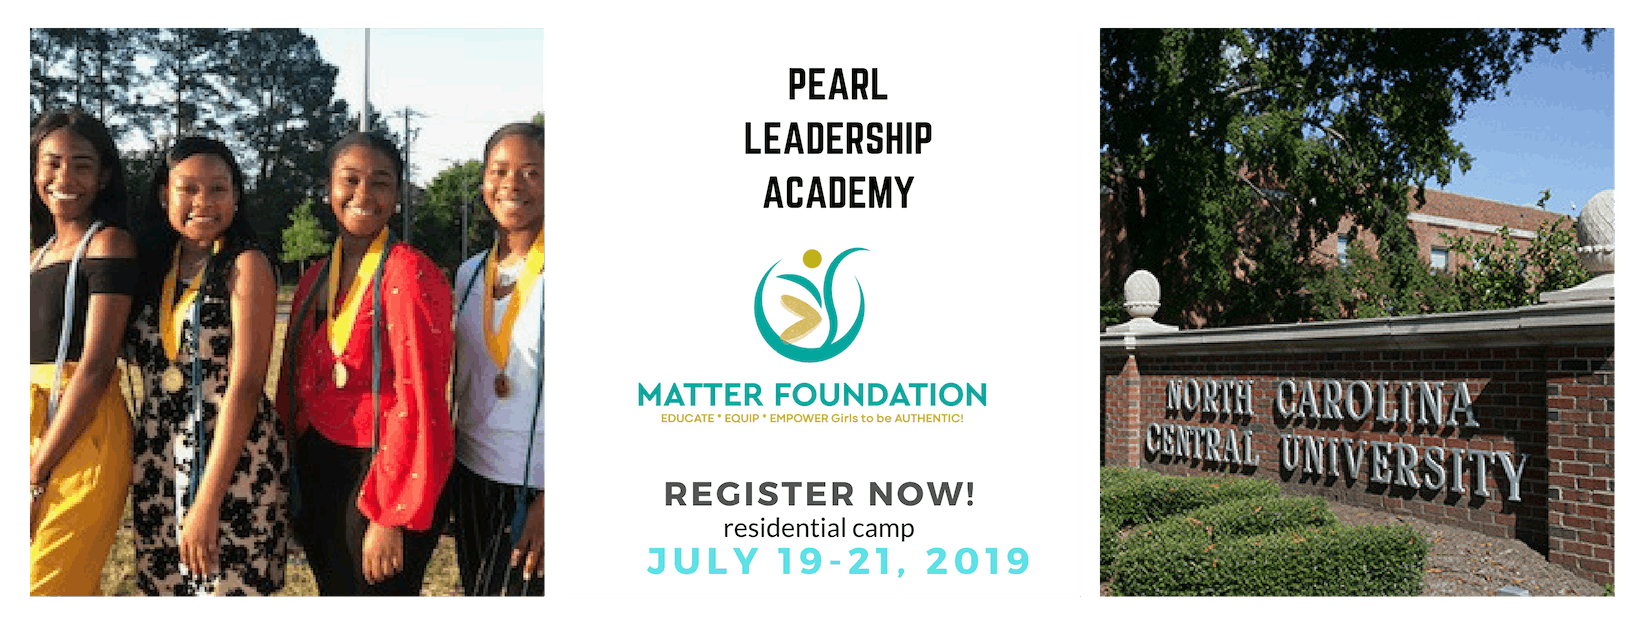 Pearl Leadership Academy